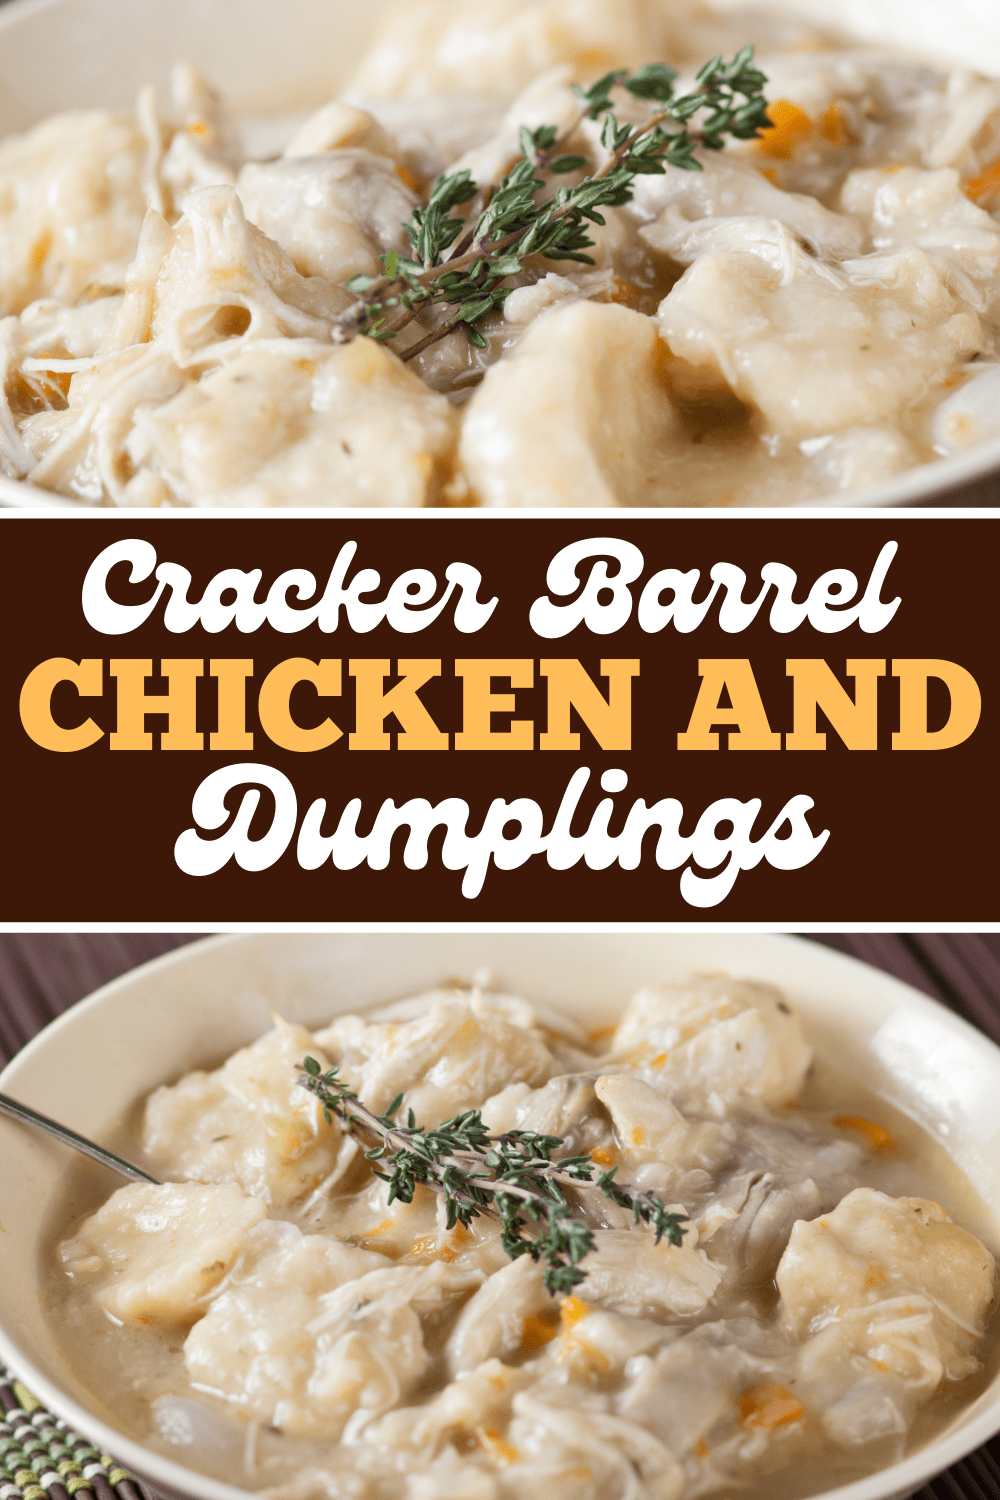 chicken and dumplings cracker barrel